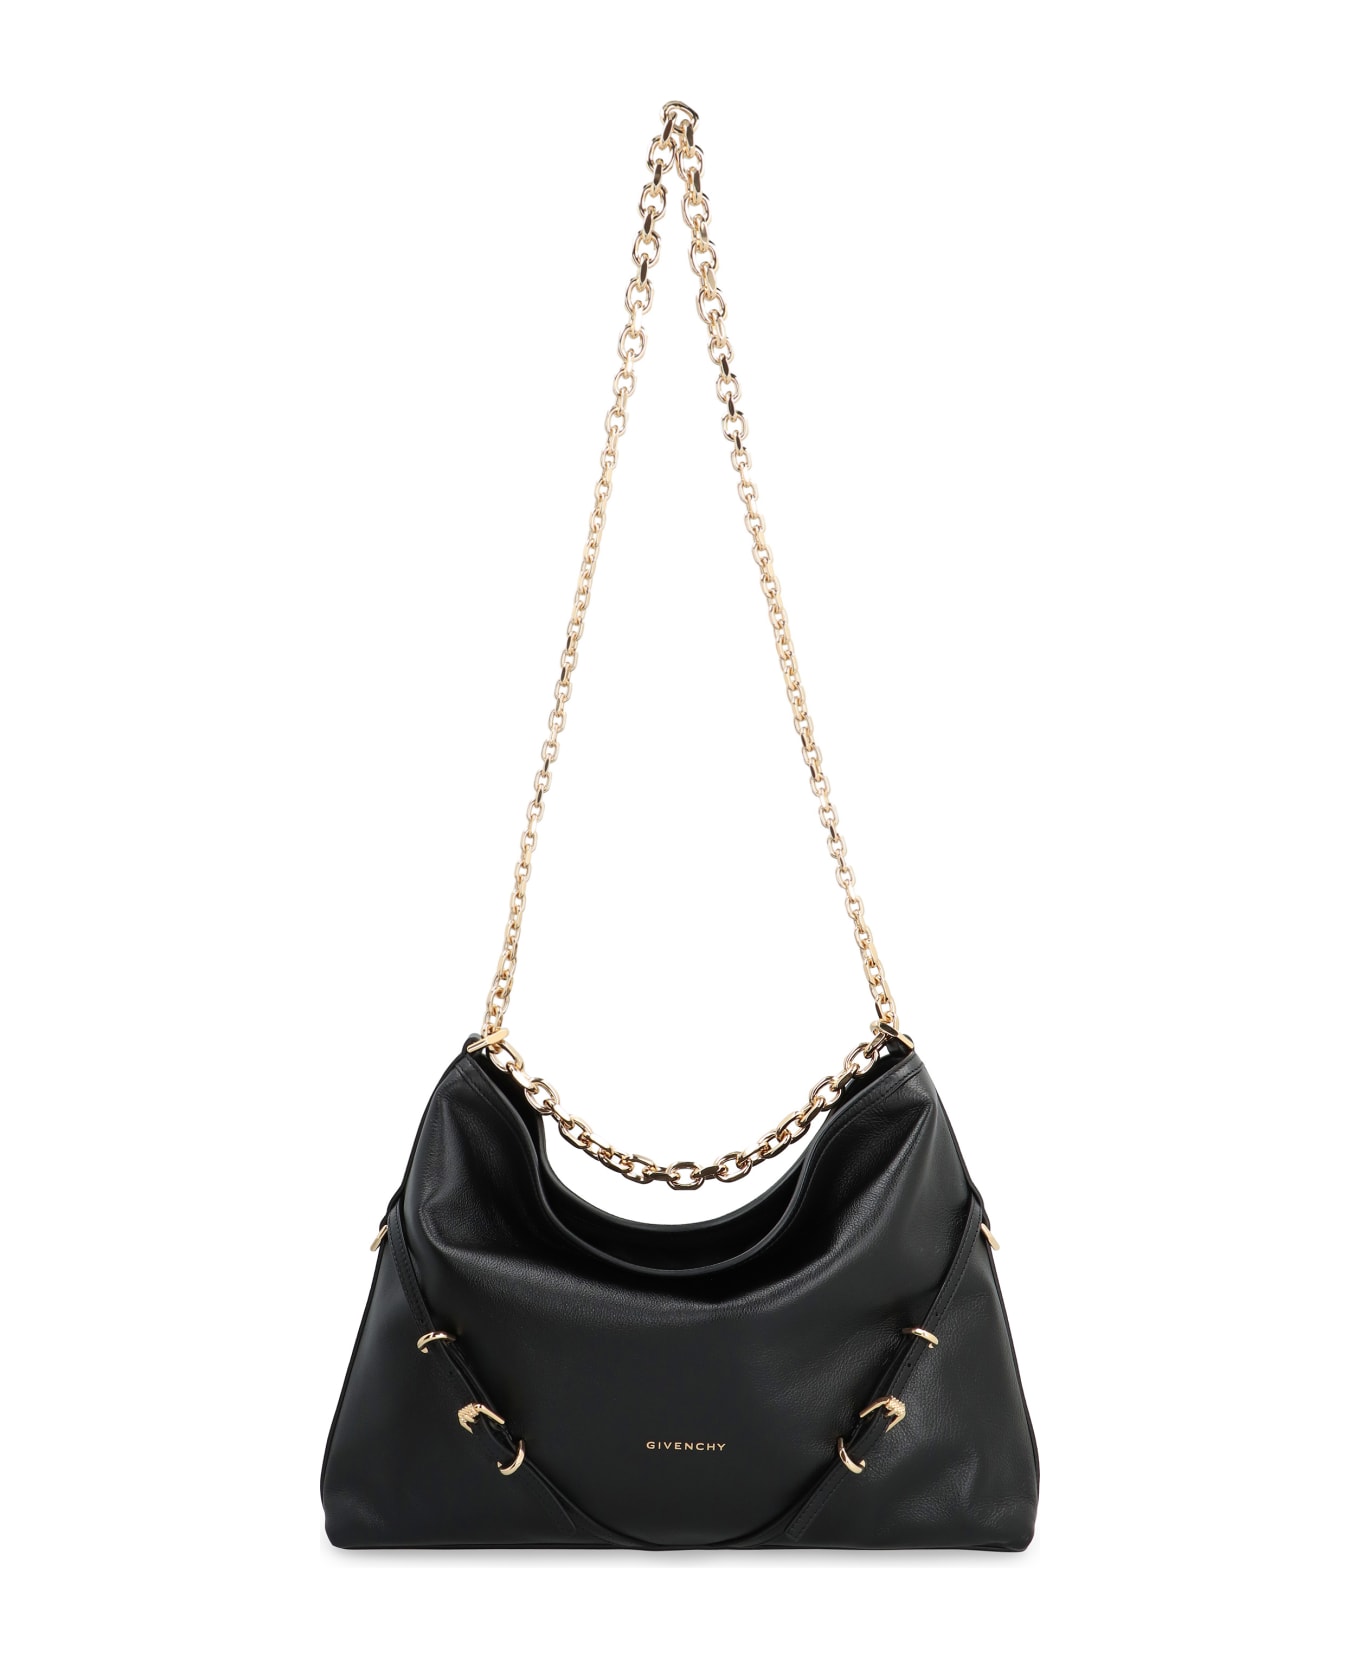 Givenchy Voyou Chain Leather Shoulder Bag - black